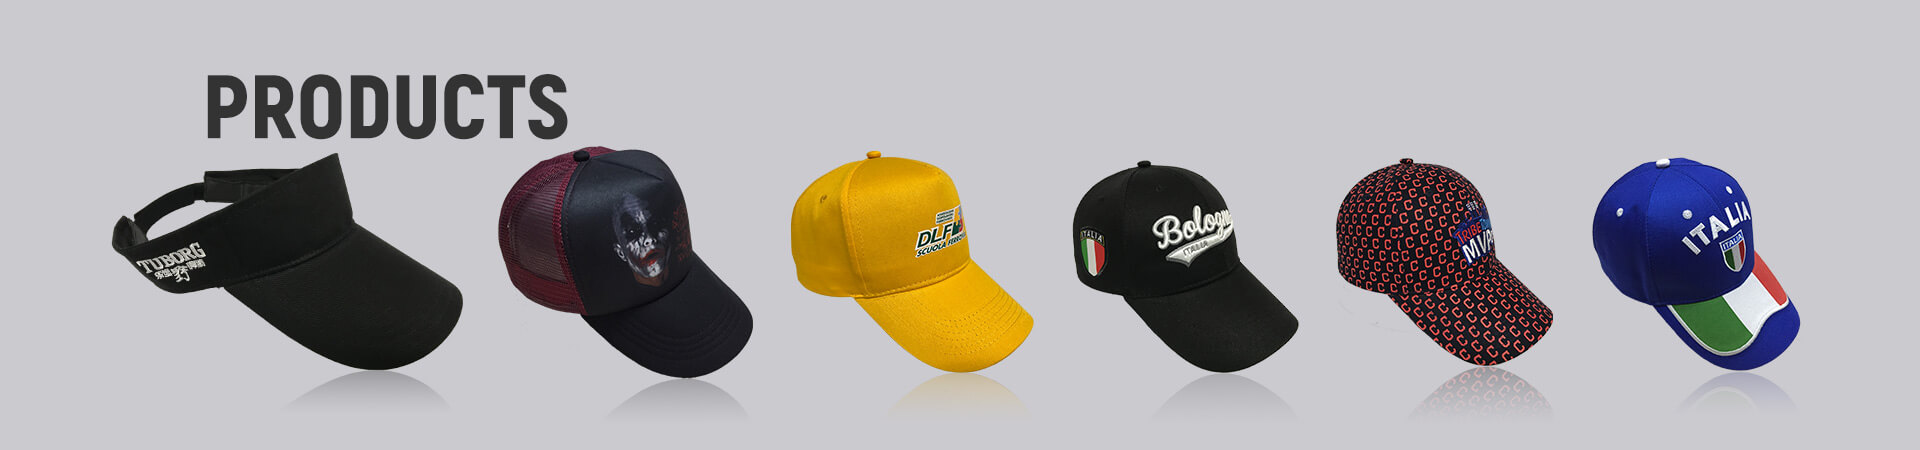 Productos Archives - Gorra de béisbol, gorra deportiva, gorra de golf, gorra de pescador, gorra de camionero